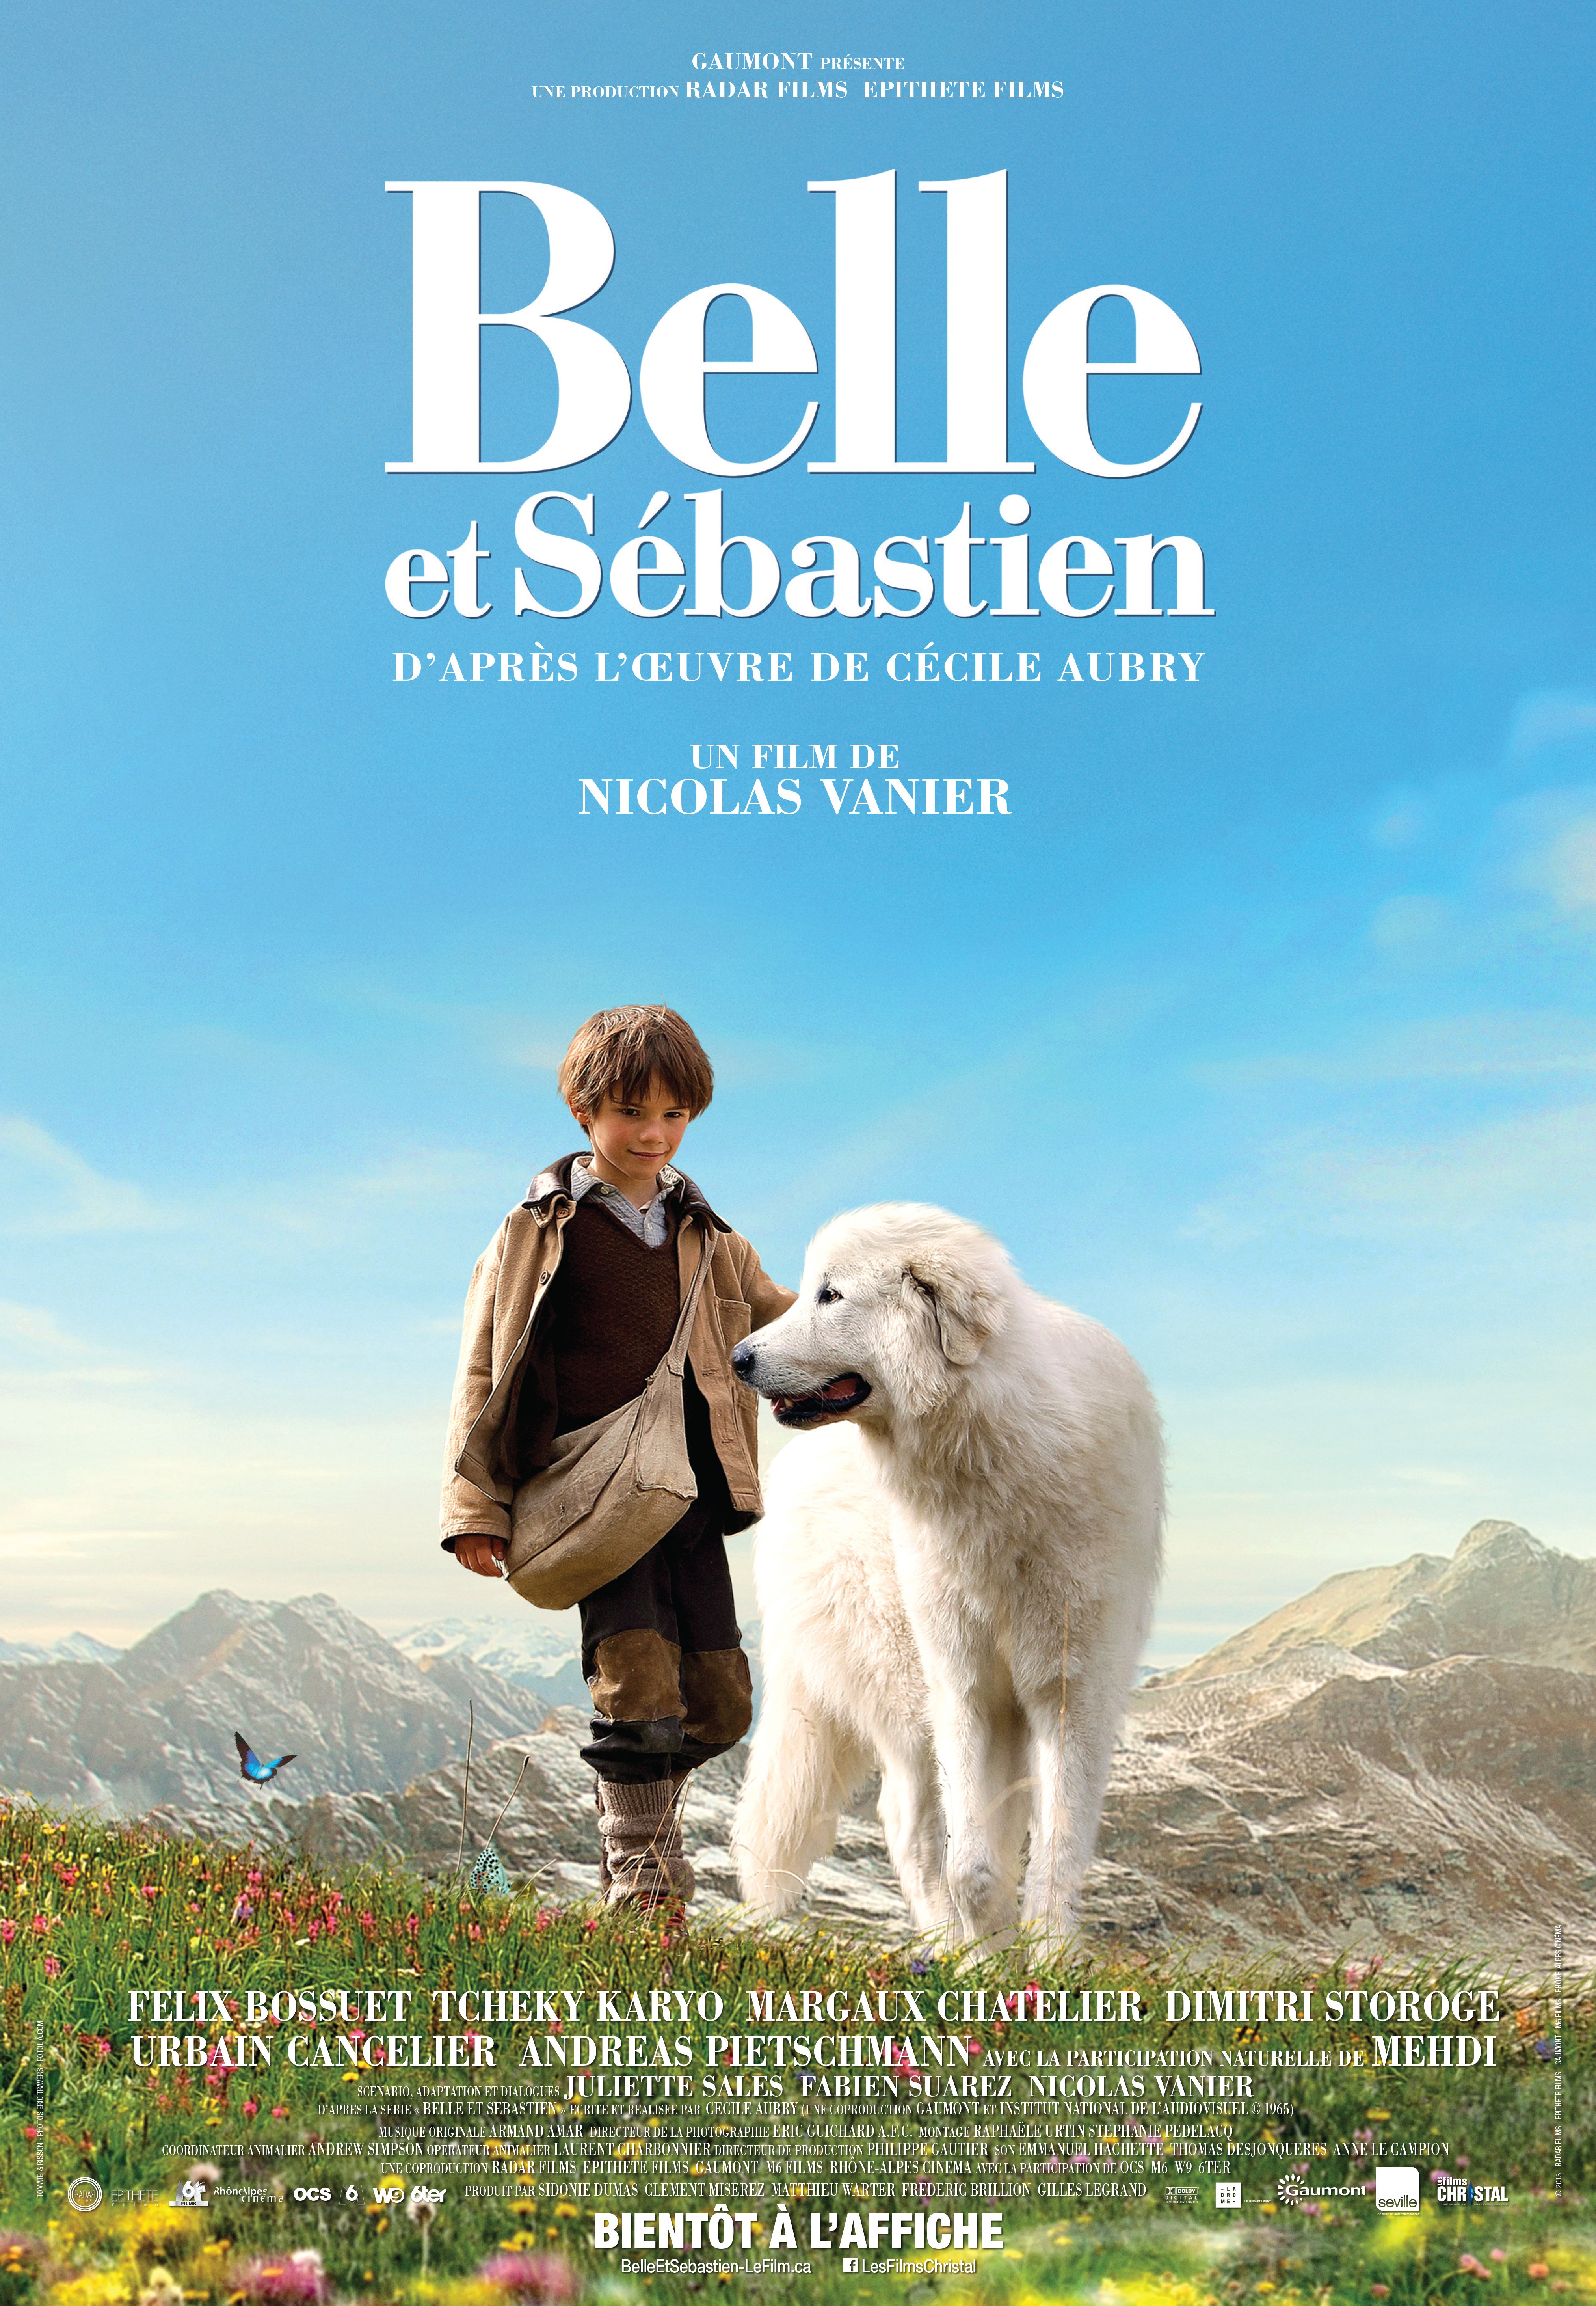 Poster of the movie Belle et Sébastien